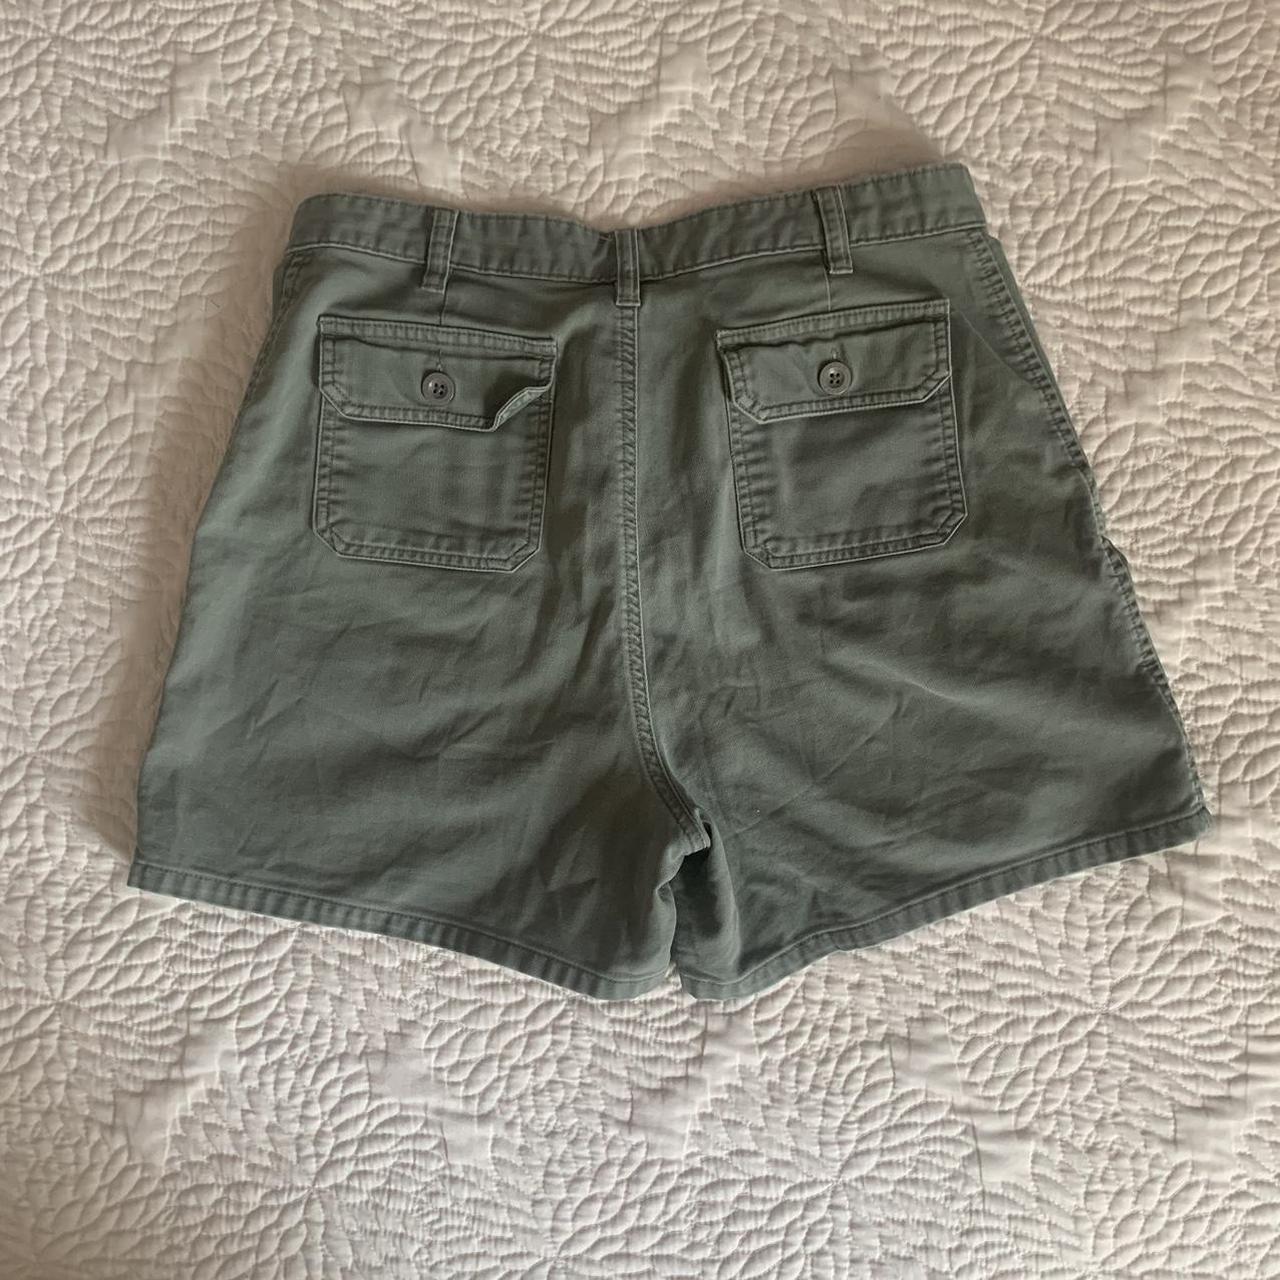 High Sierra Women's Khaki and Green Shorts (3)